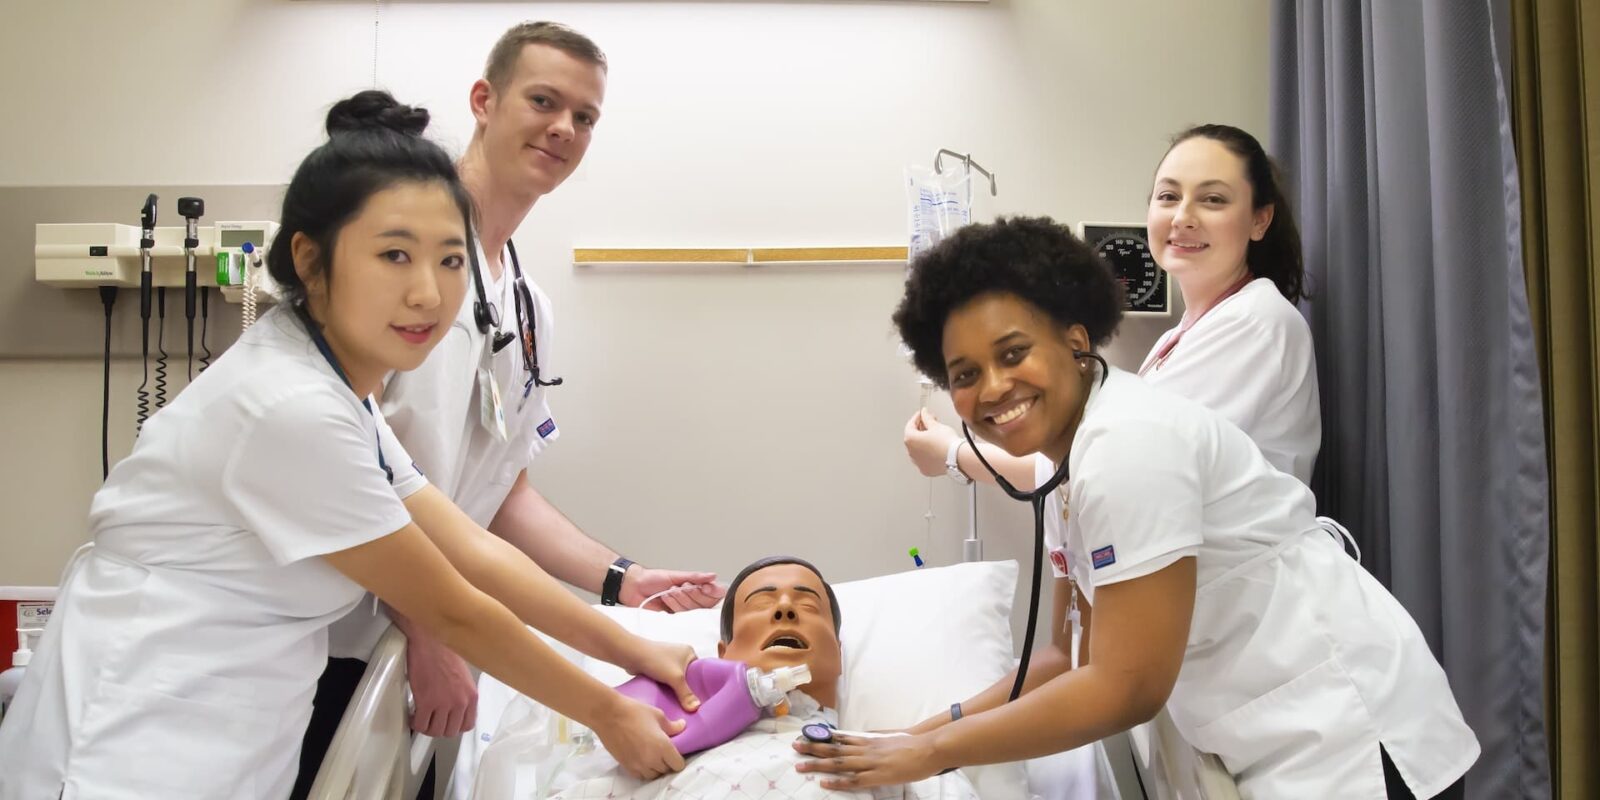 nursing students practicing skills on hospital dummy